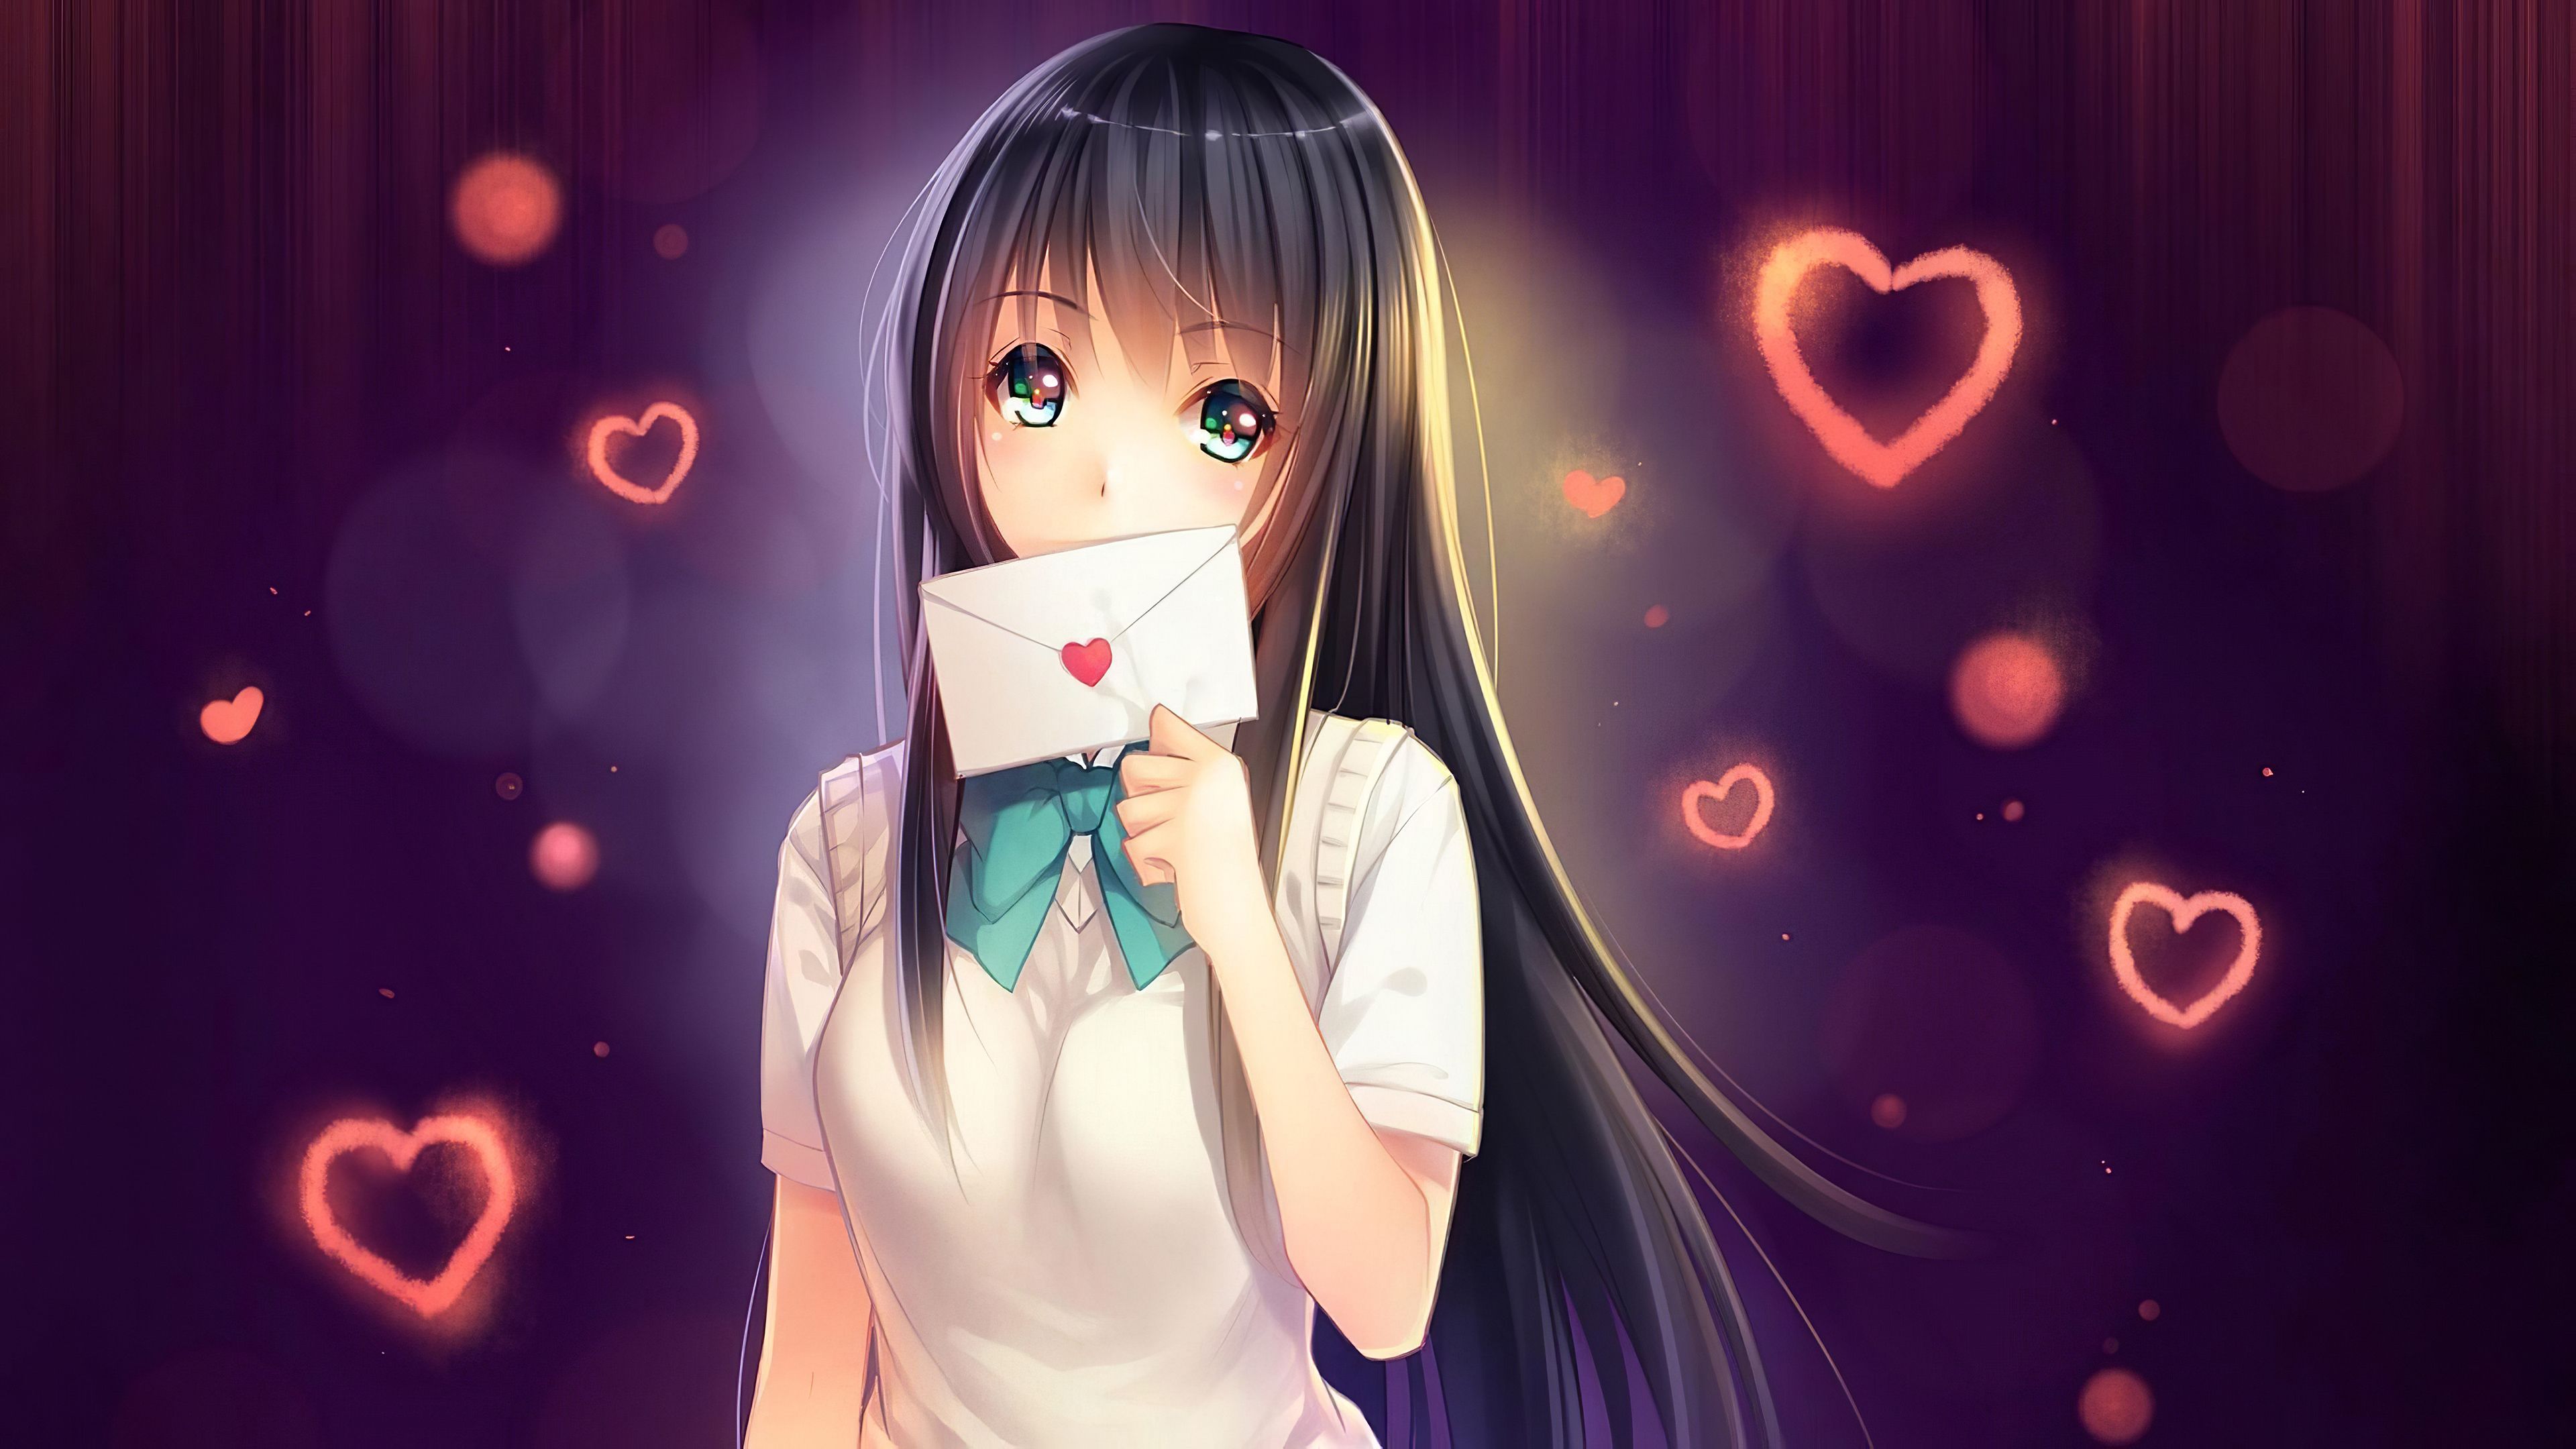 Anime Girl In Love With Love Letter, HD Anime, 4k Wallpaper